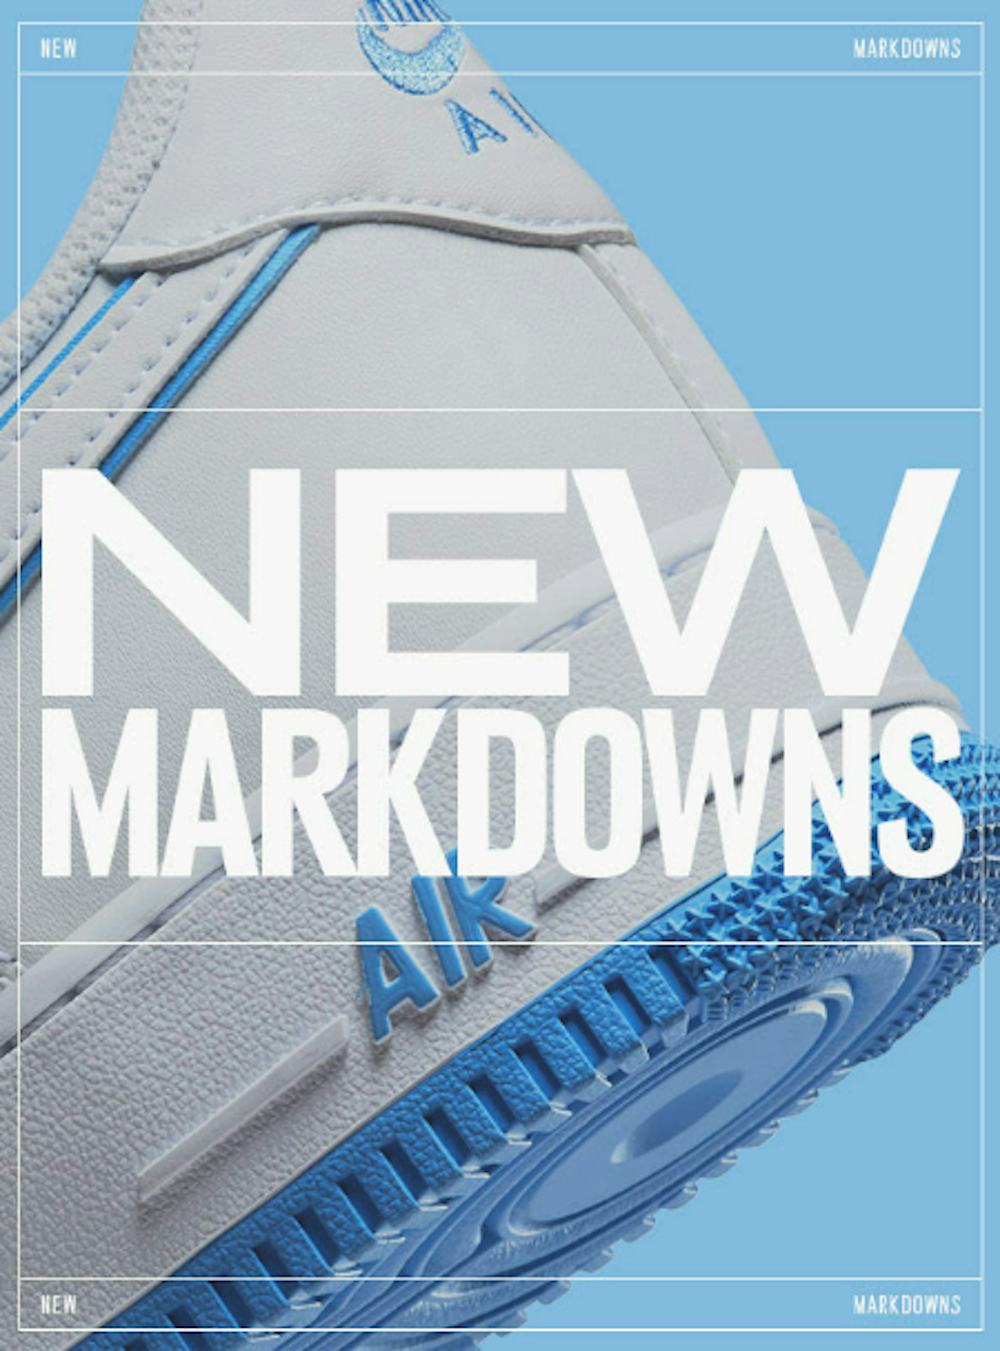 New Markdowns